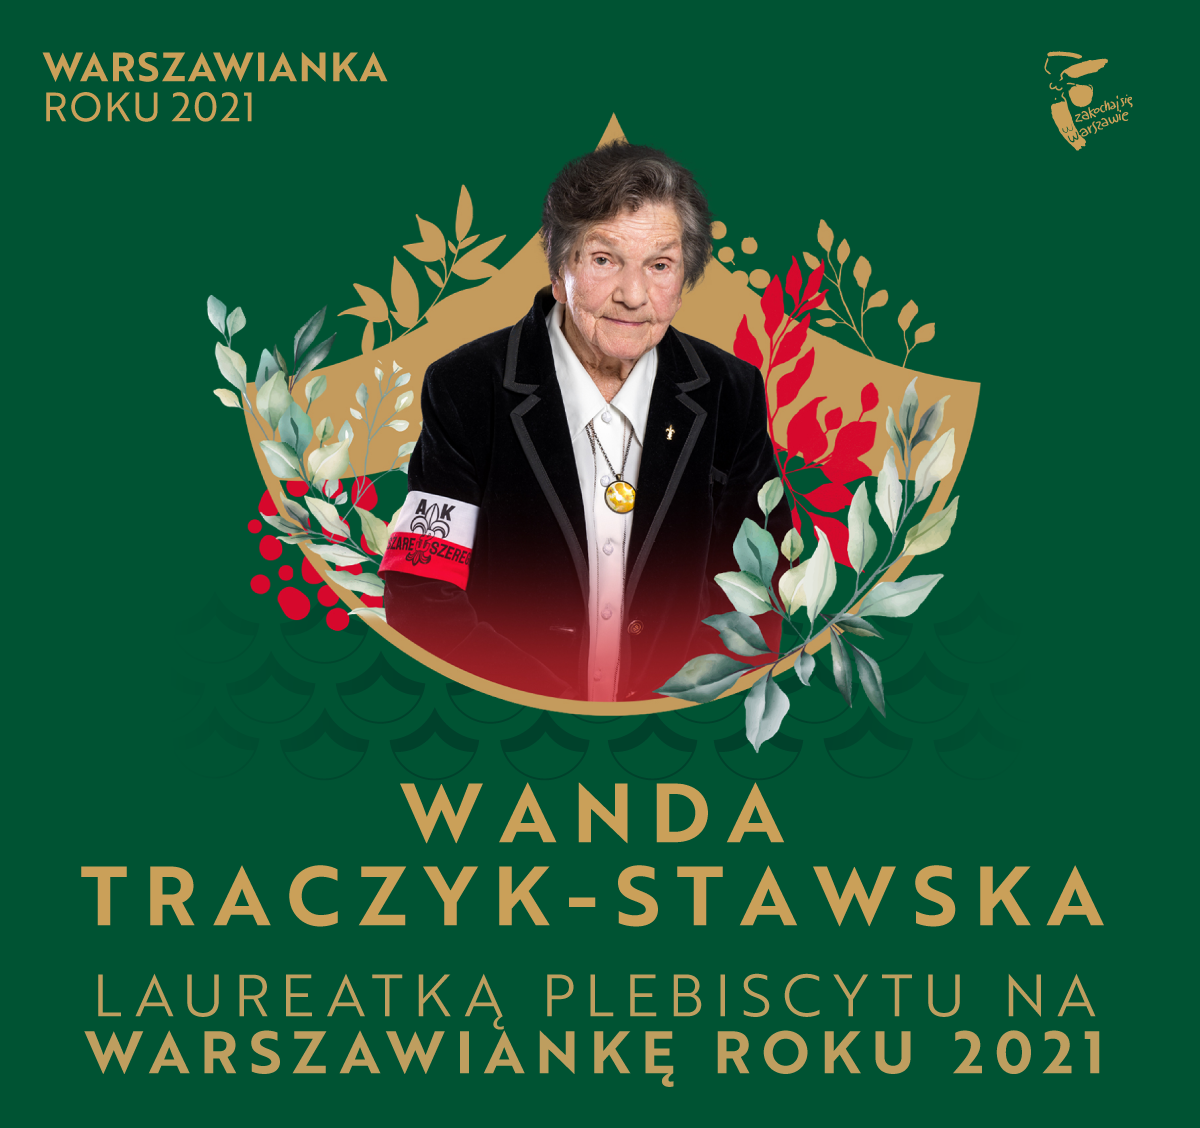 Warnda Traczyk-Stawska